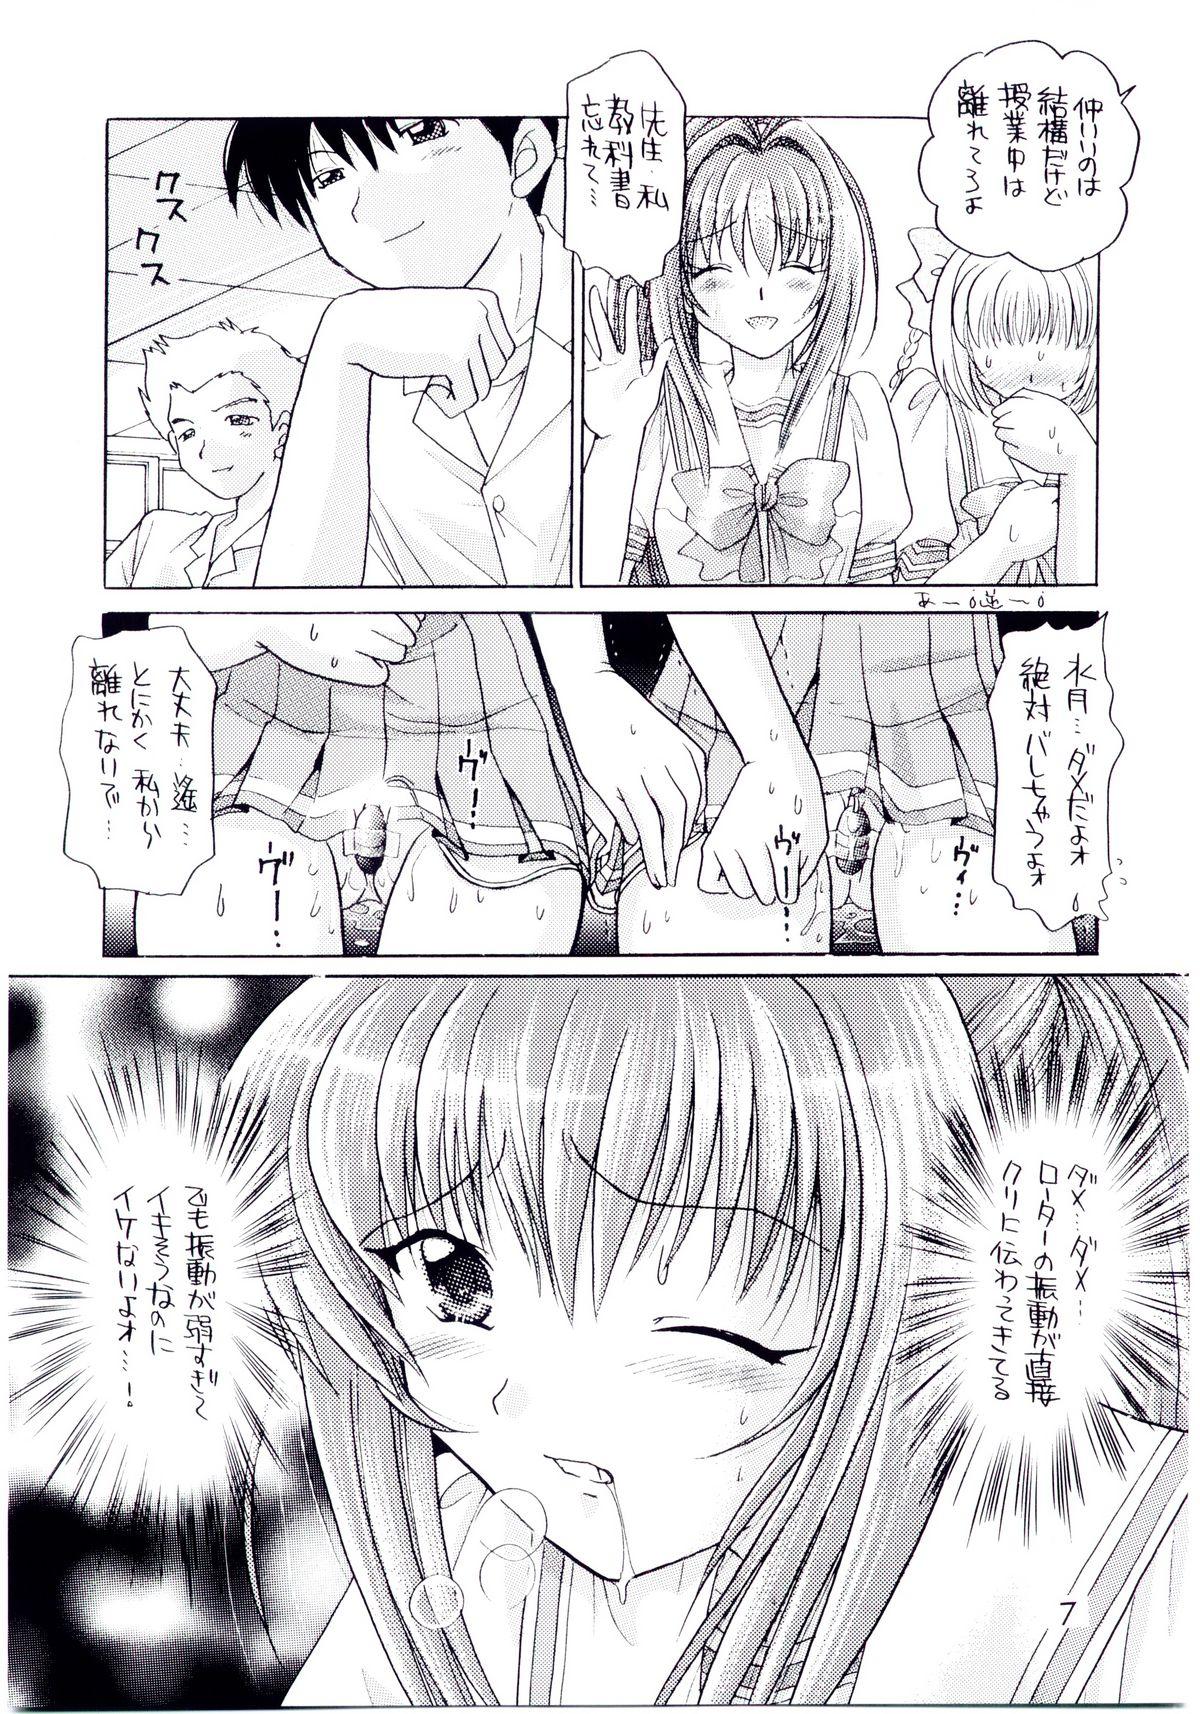 Hot Naked Women Kimi ga nozomu eien zettai zetsumei 2 - Kimi ga nozomu eien Masterbation - Page 6